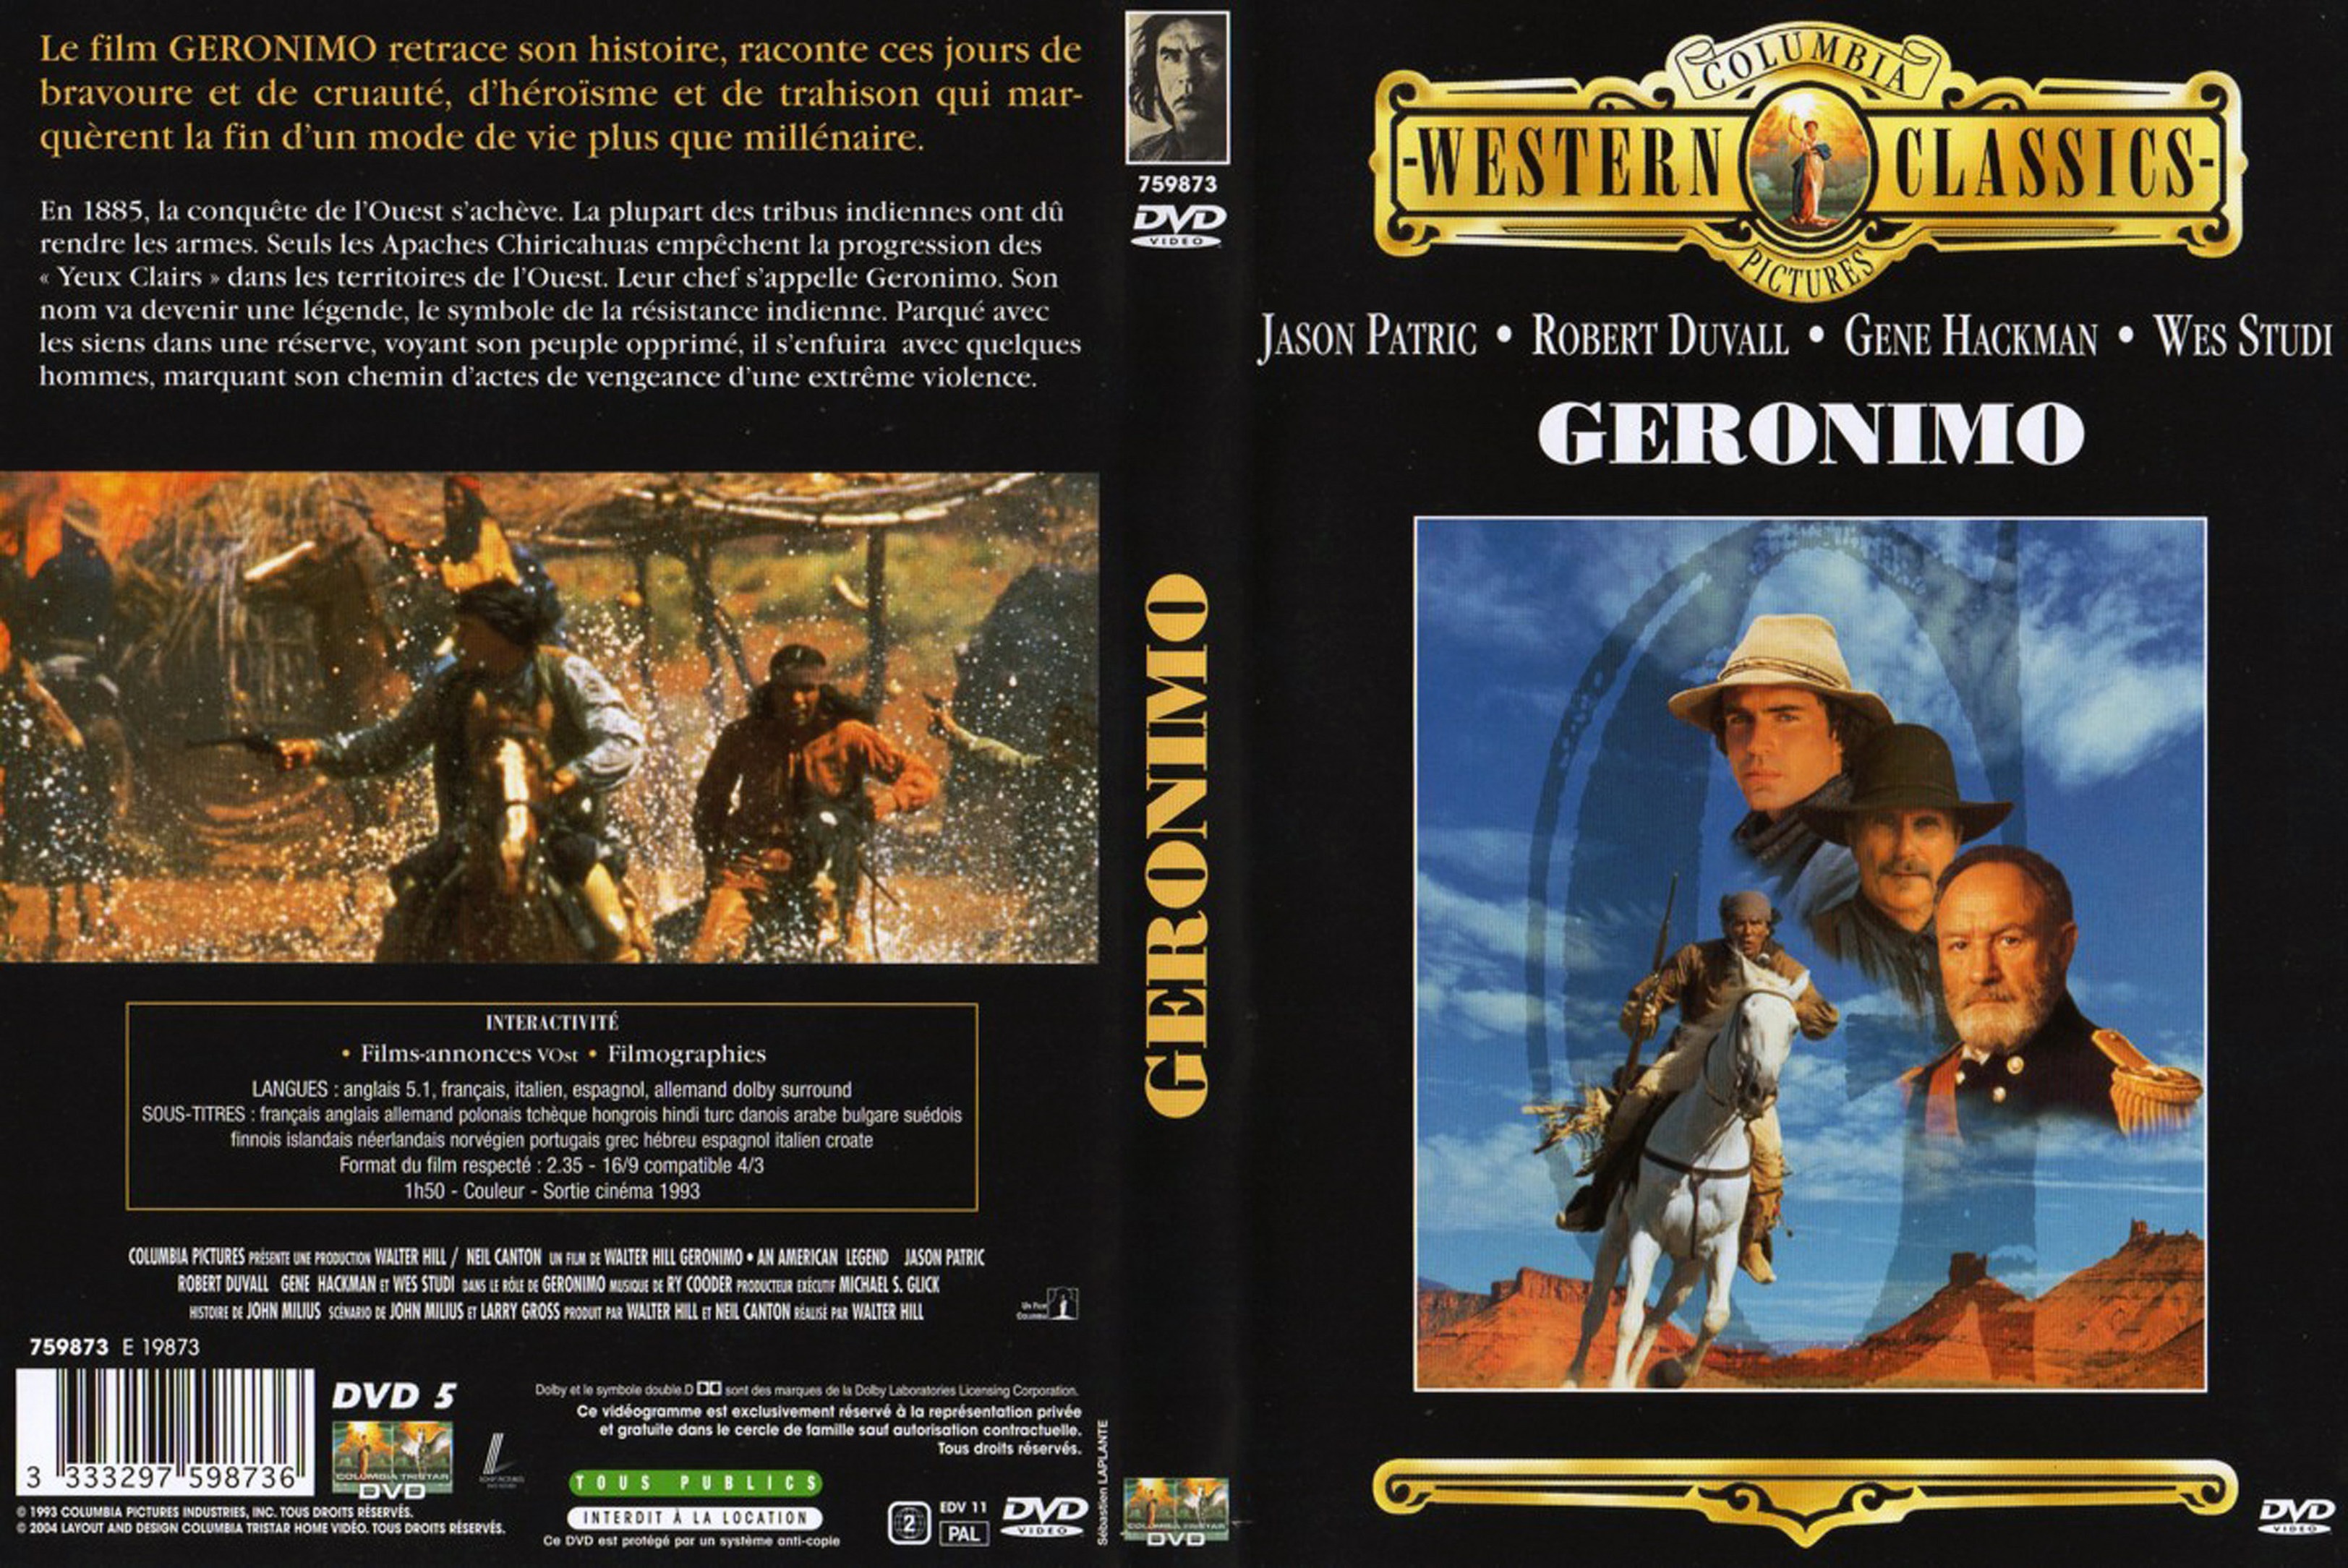 Jaquette DVD Geronimo